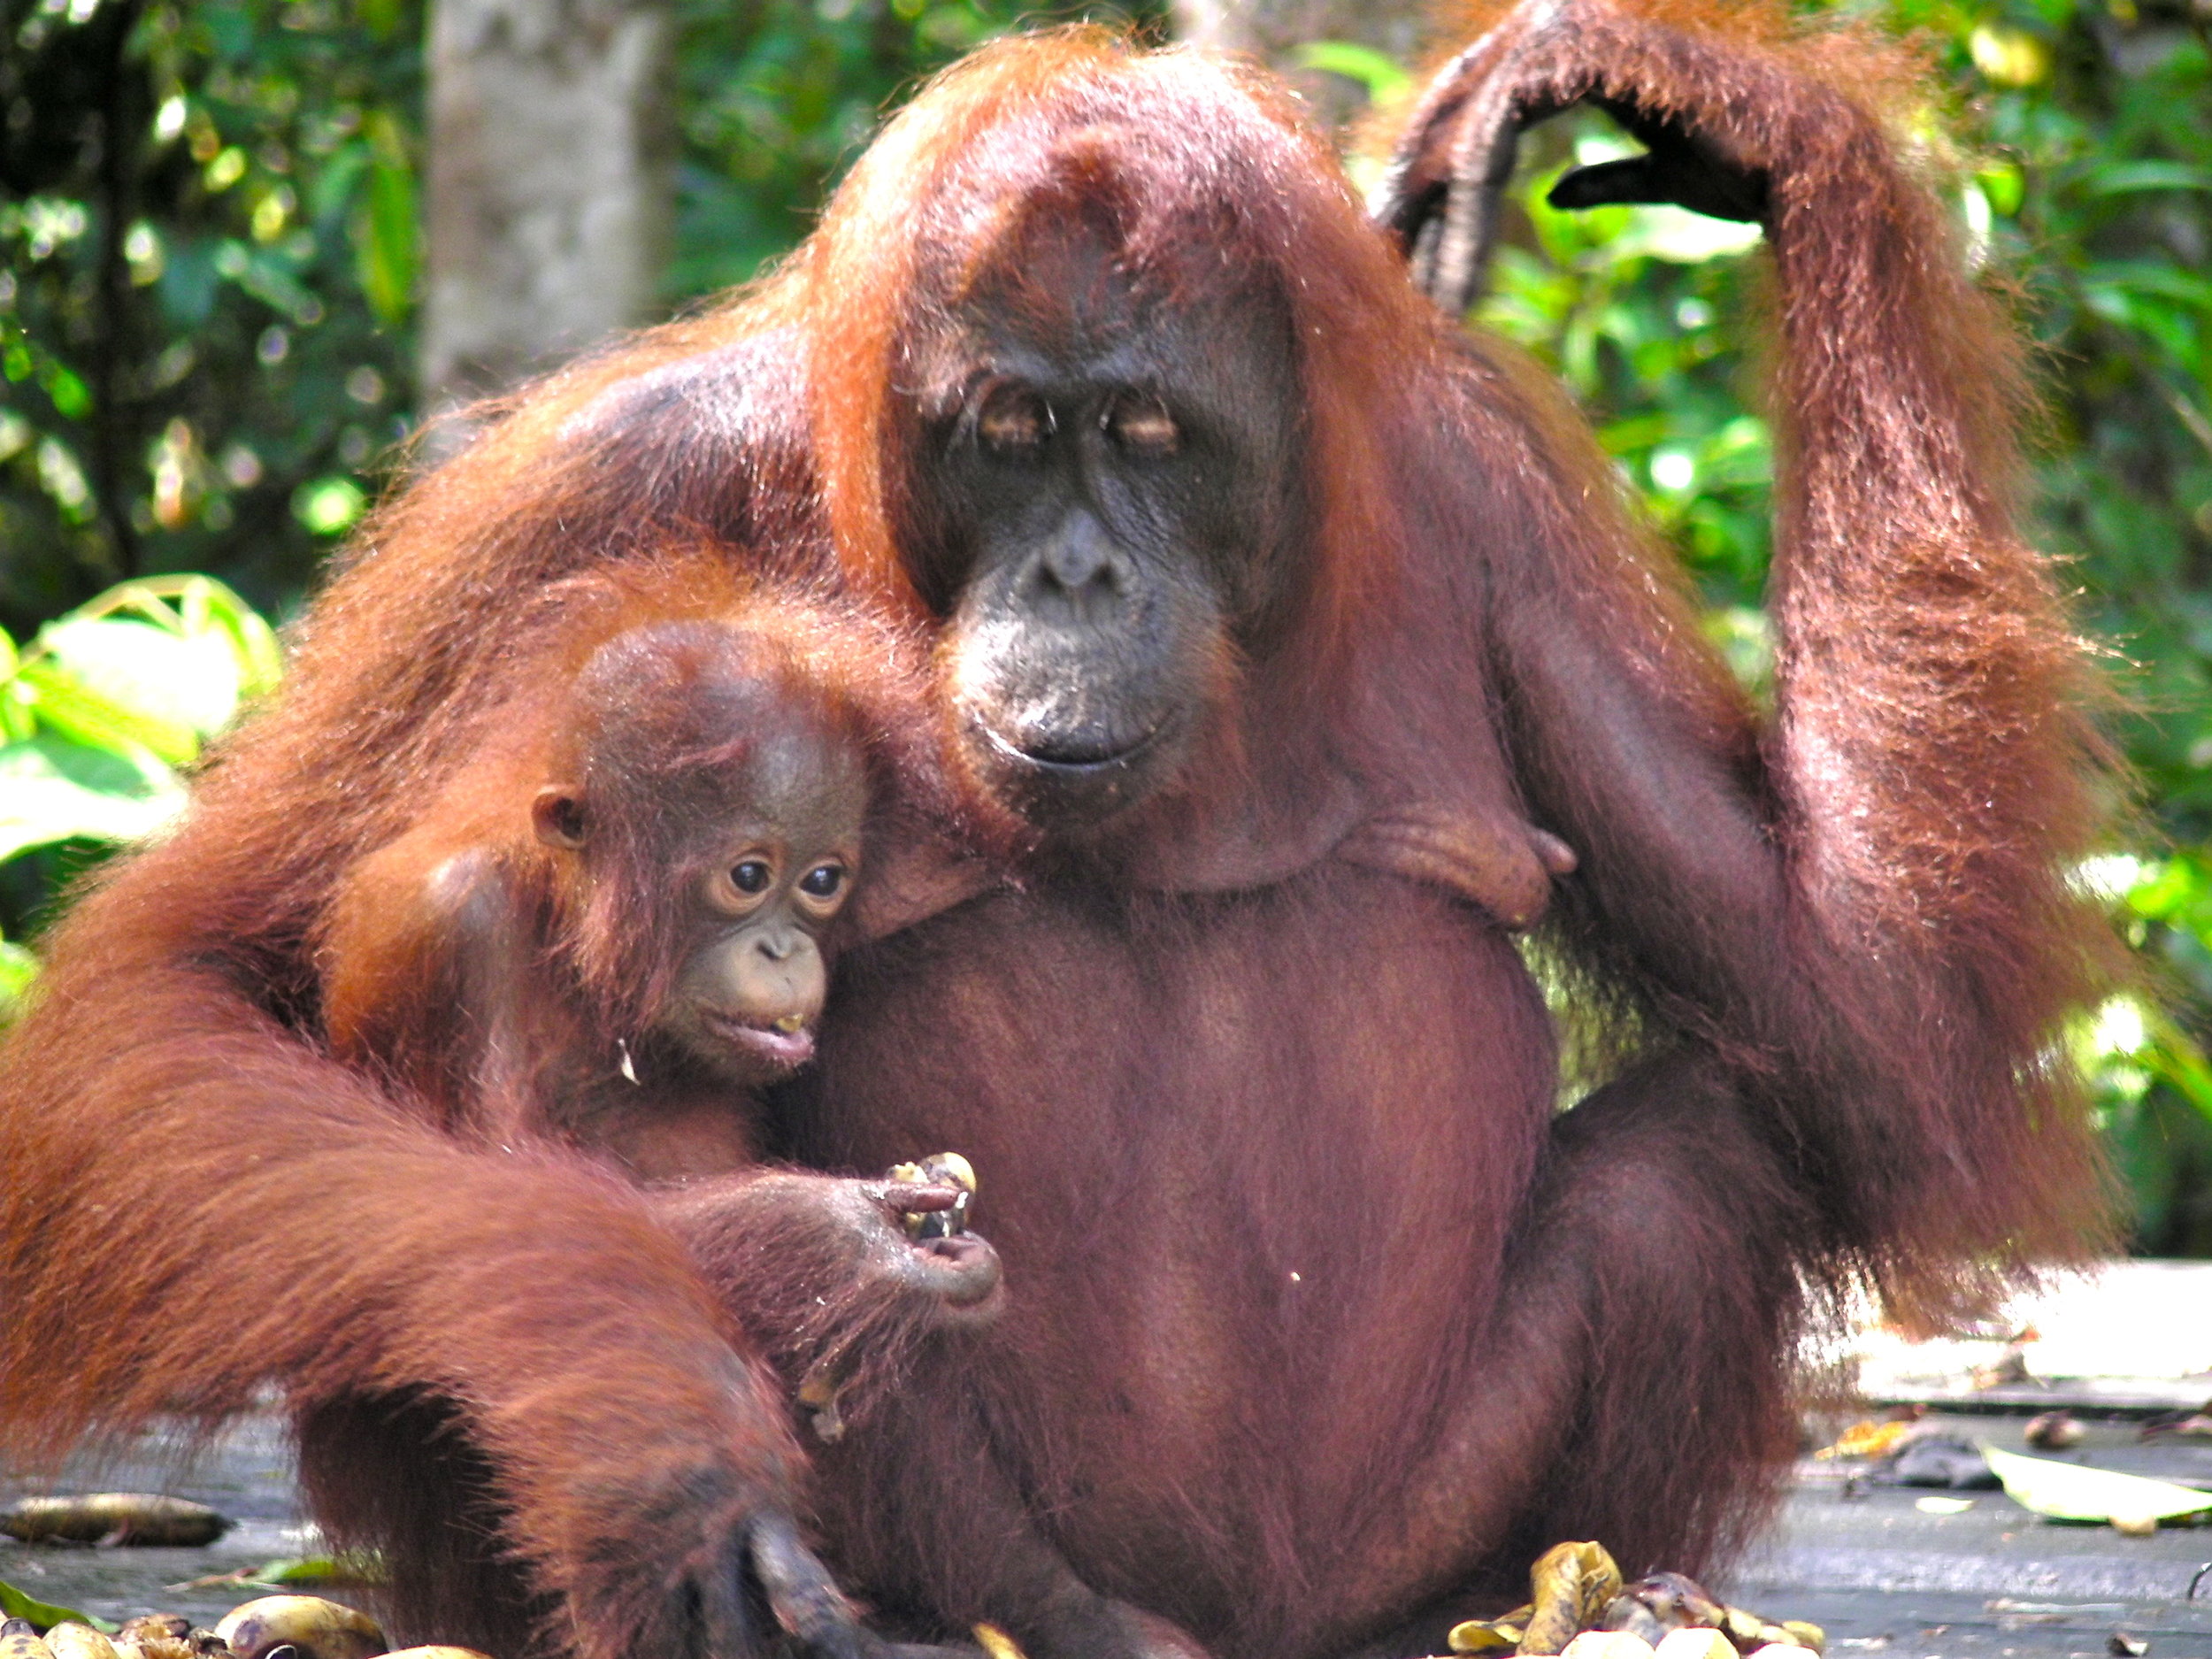 The victims of palm oil: Mama and baby orangutan in Borneo